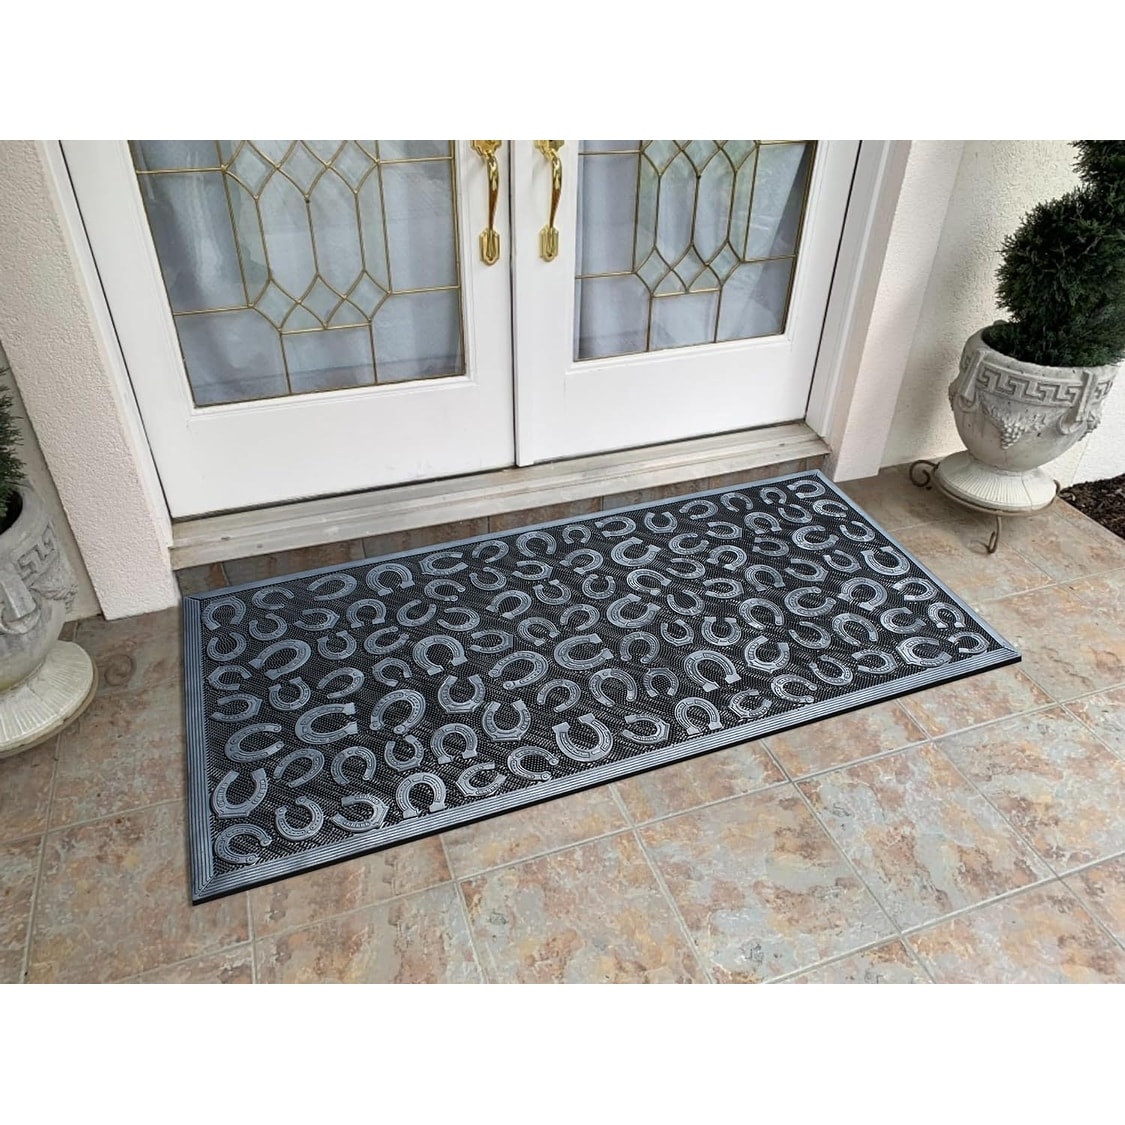 A1hc Rubber Doormat/Oak Tree Design, All Season Large 30x48, Bronze